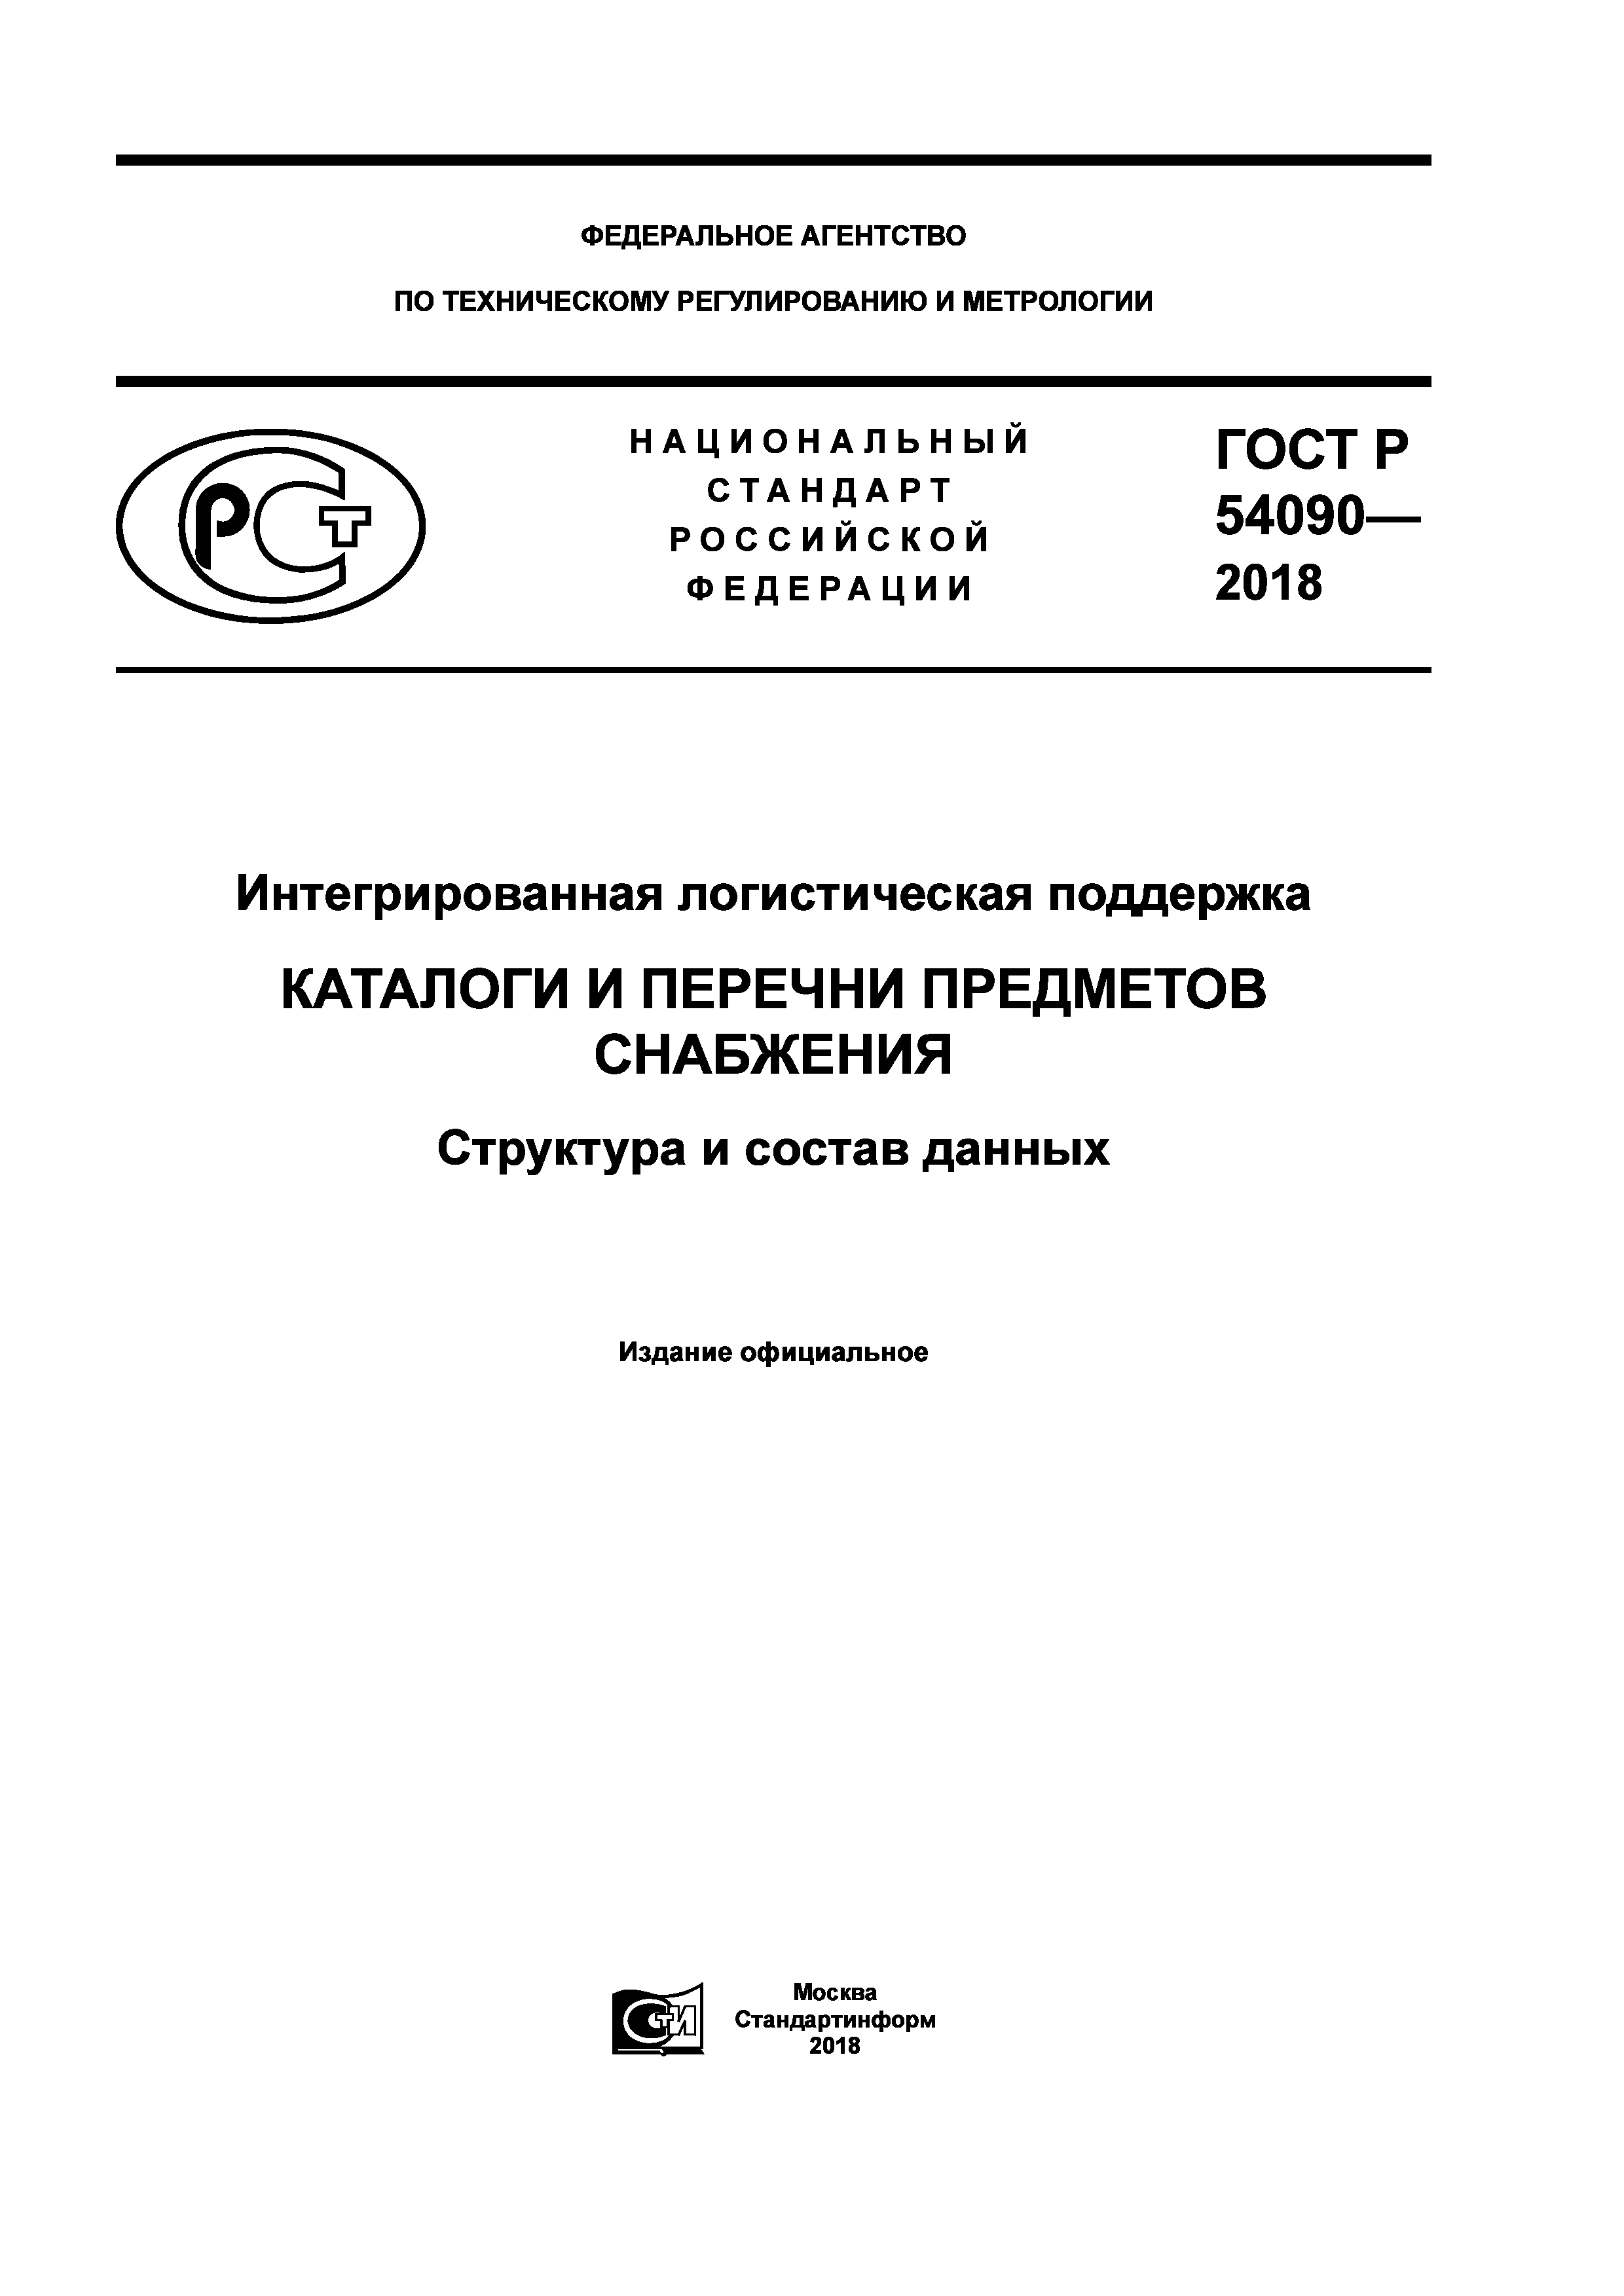 ГОСТ Р 54090-2018